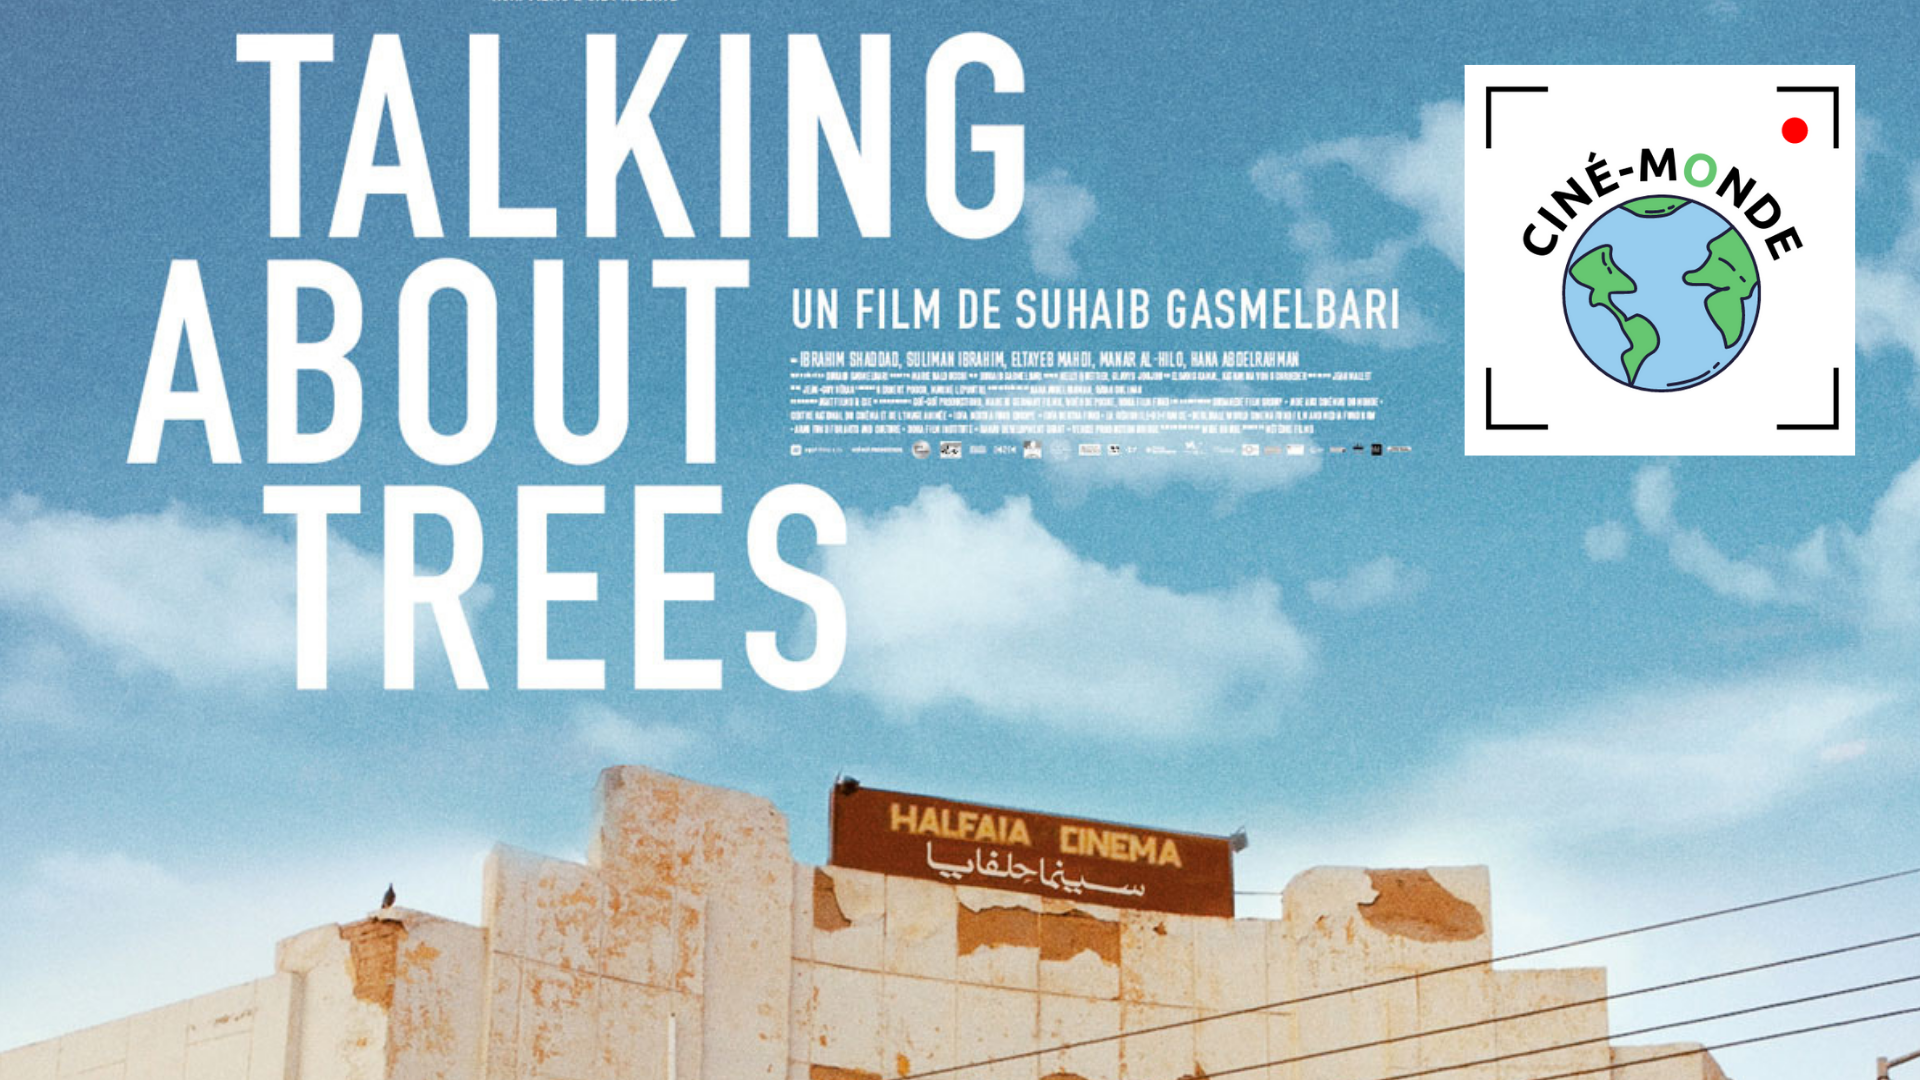 Cine monde talking about trees